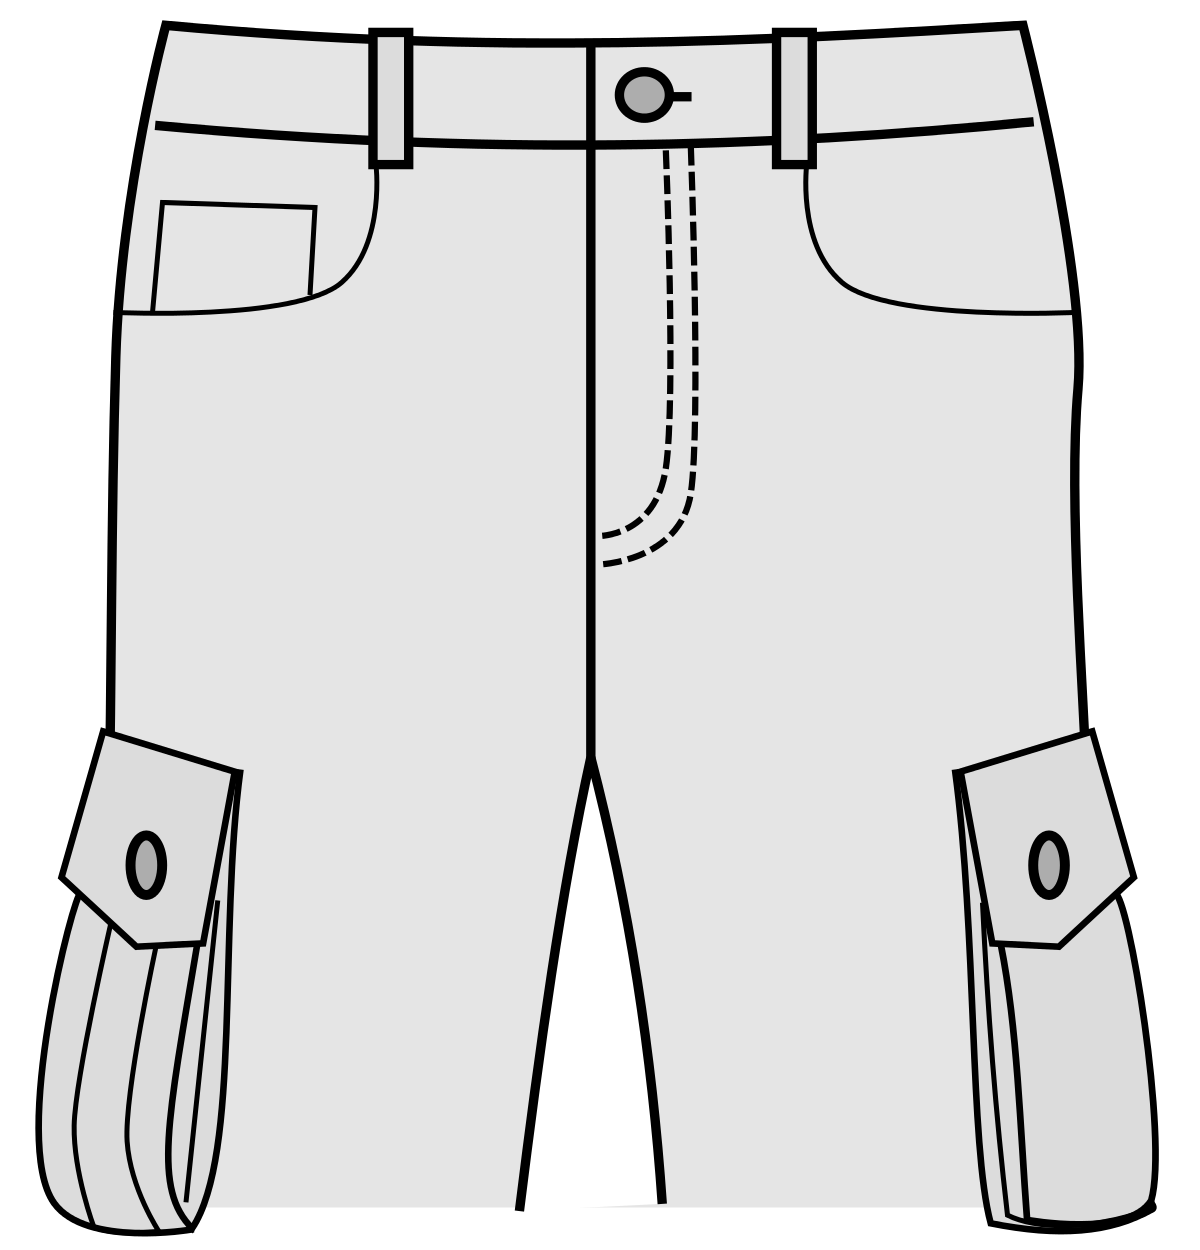 Карман джинсов рисунок. Карман нарисованный. Брюки с карманами. Раскраска карман. Карман брюк вектор.